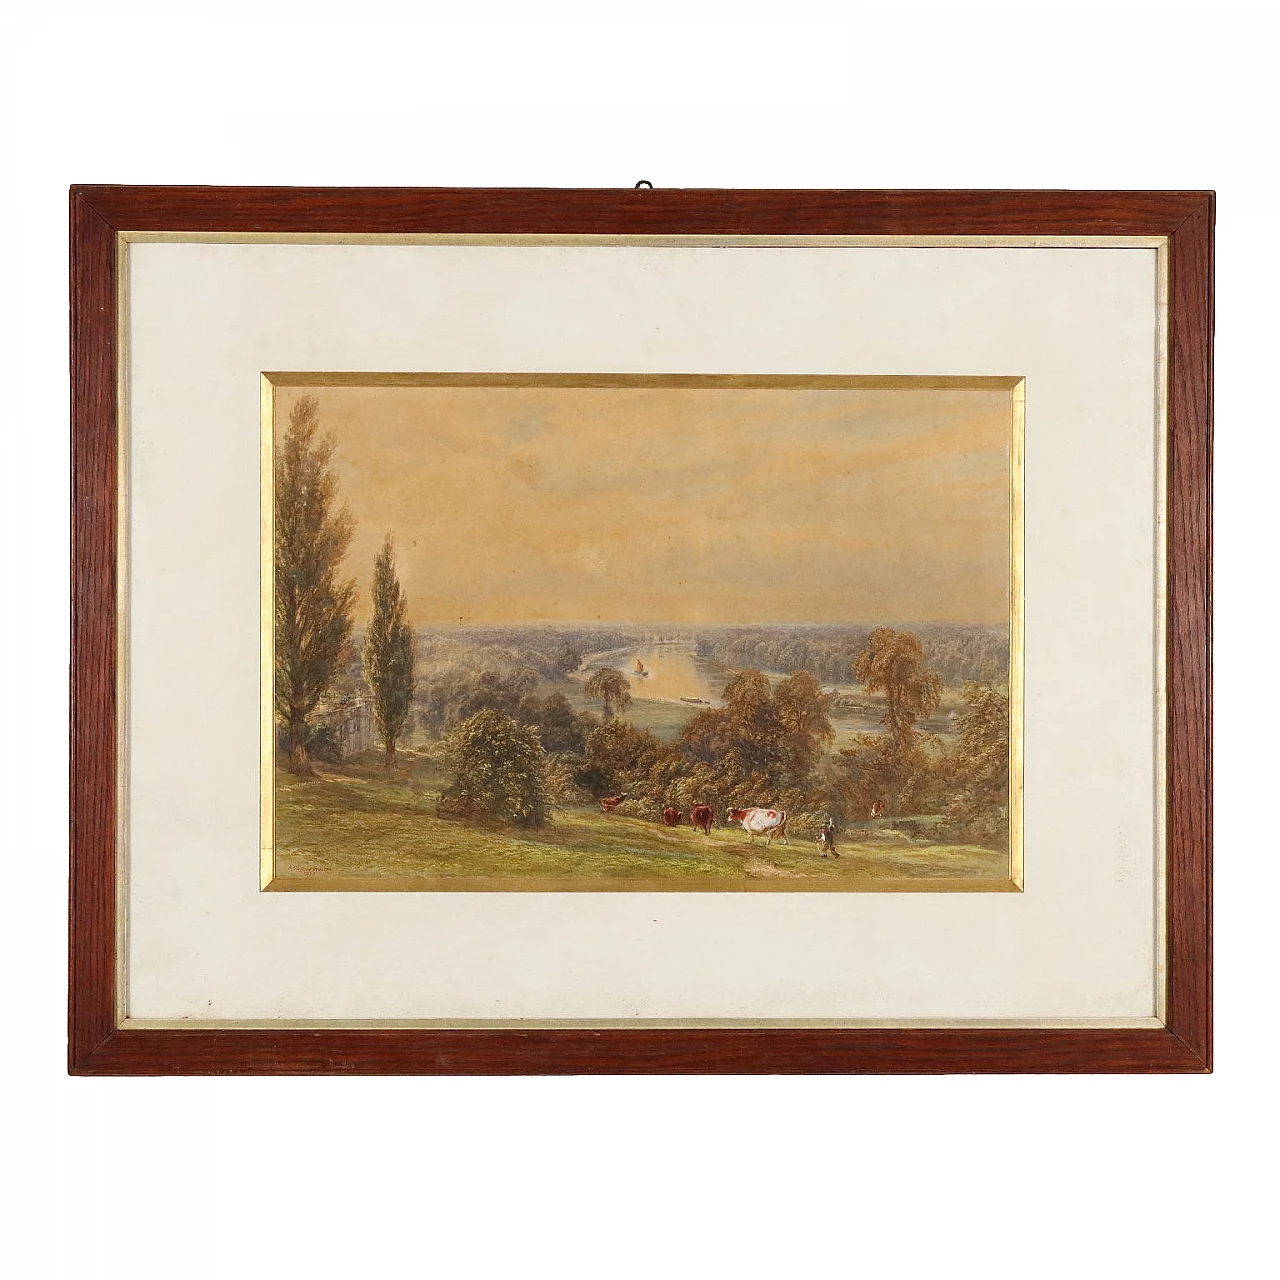 H.C. Warren, River landscape with lumberjacks, watercolor, 1878 1